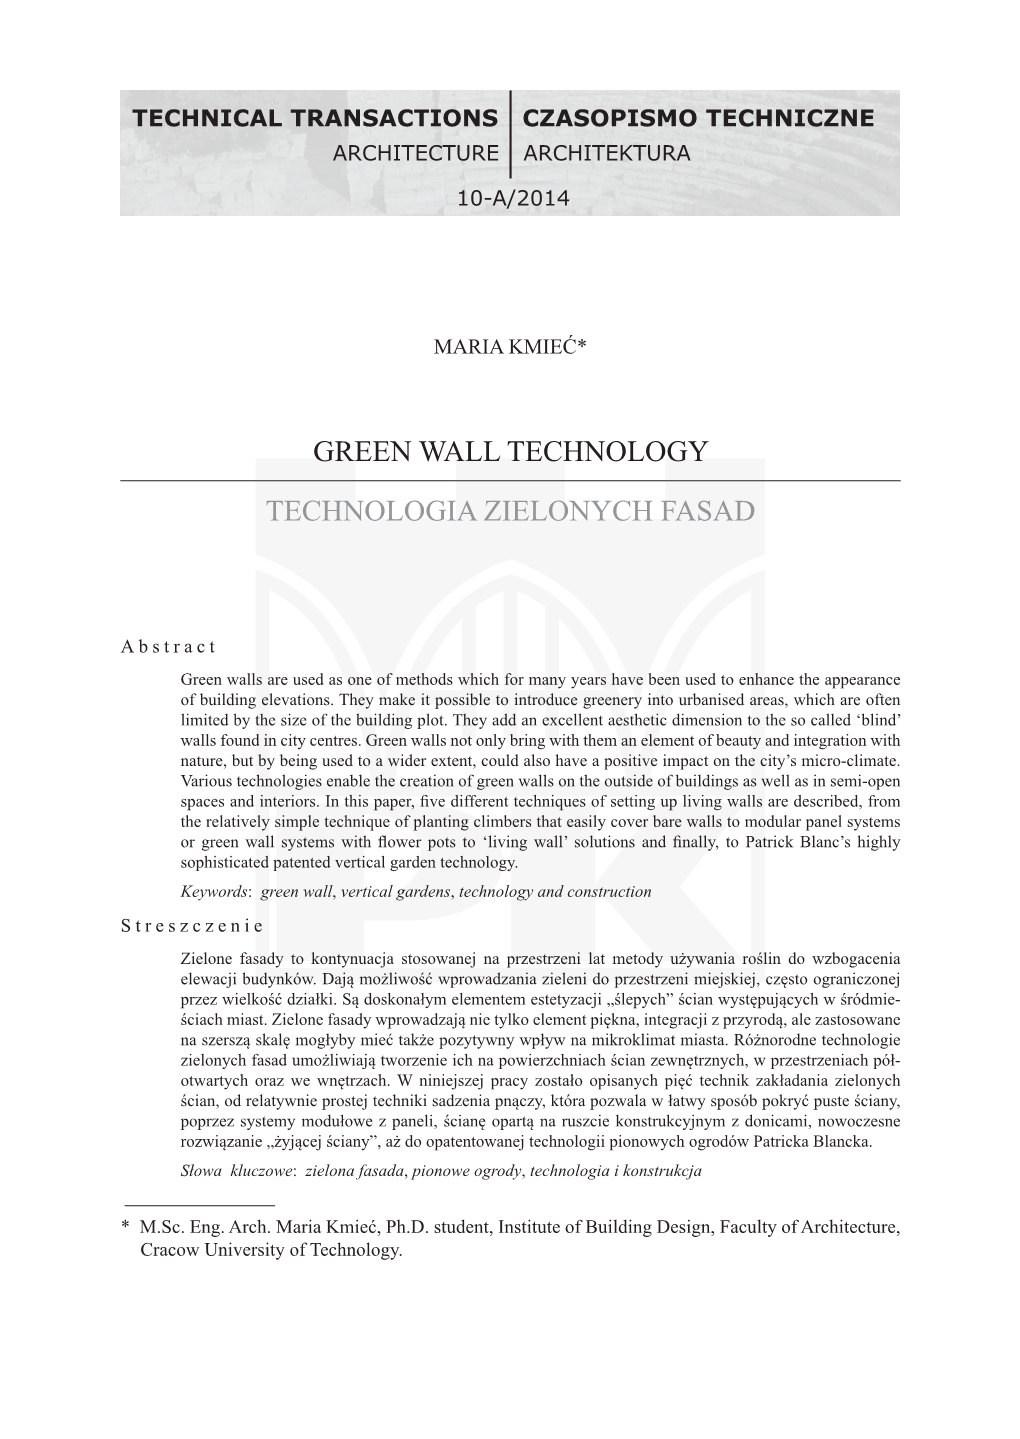 Green Wall Technology Technologia Zielonych Fasad